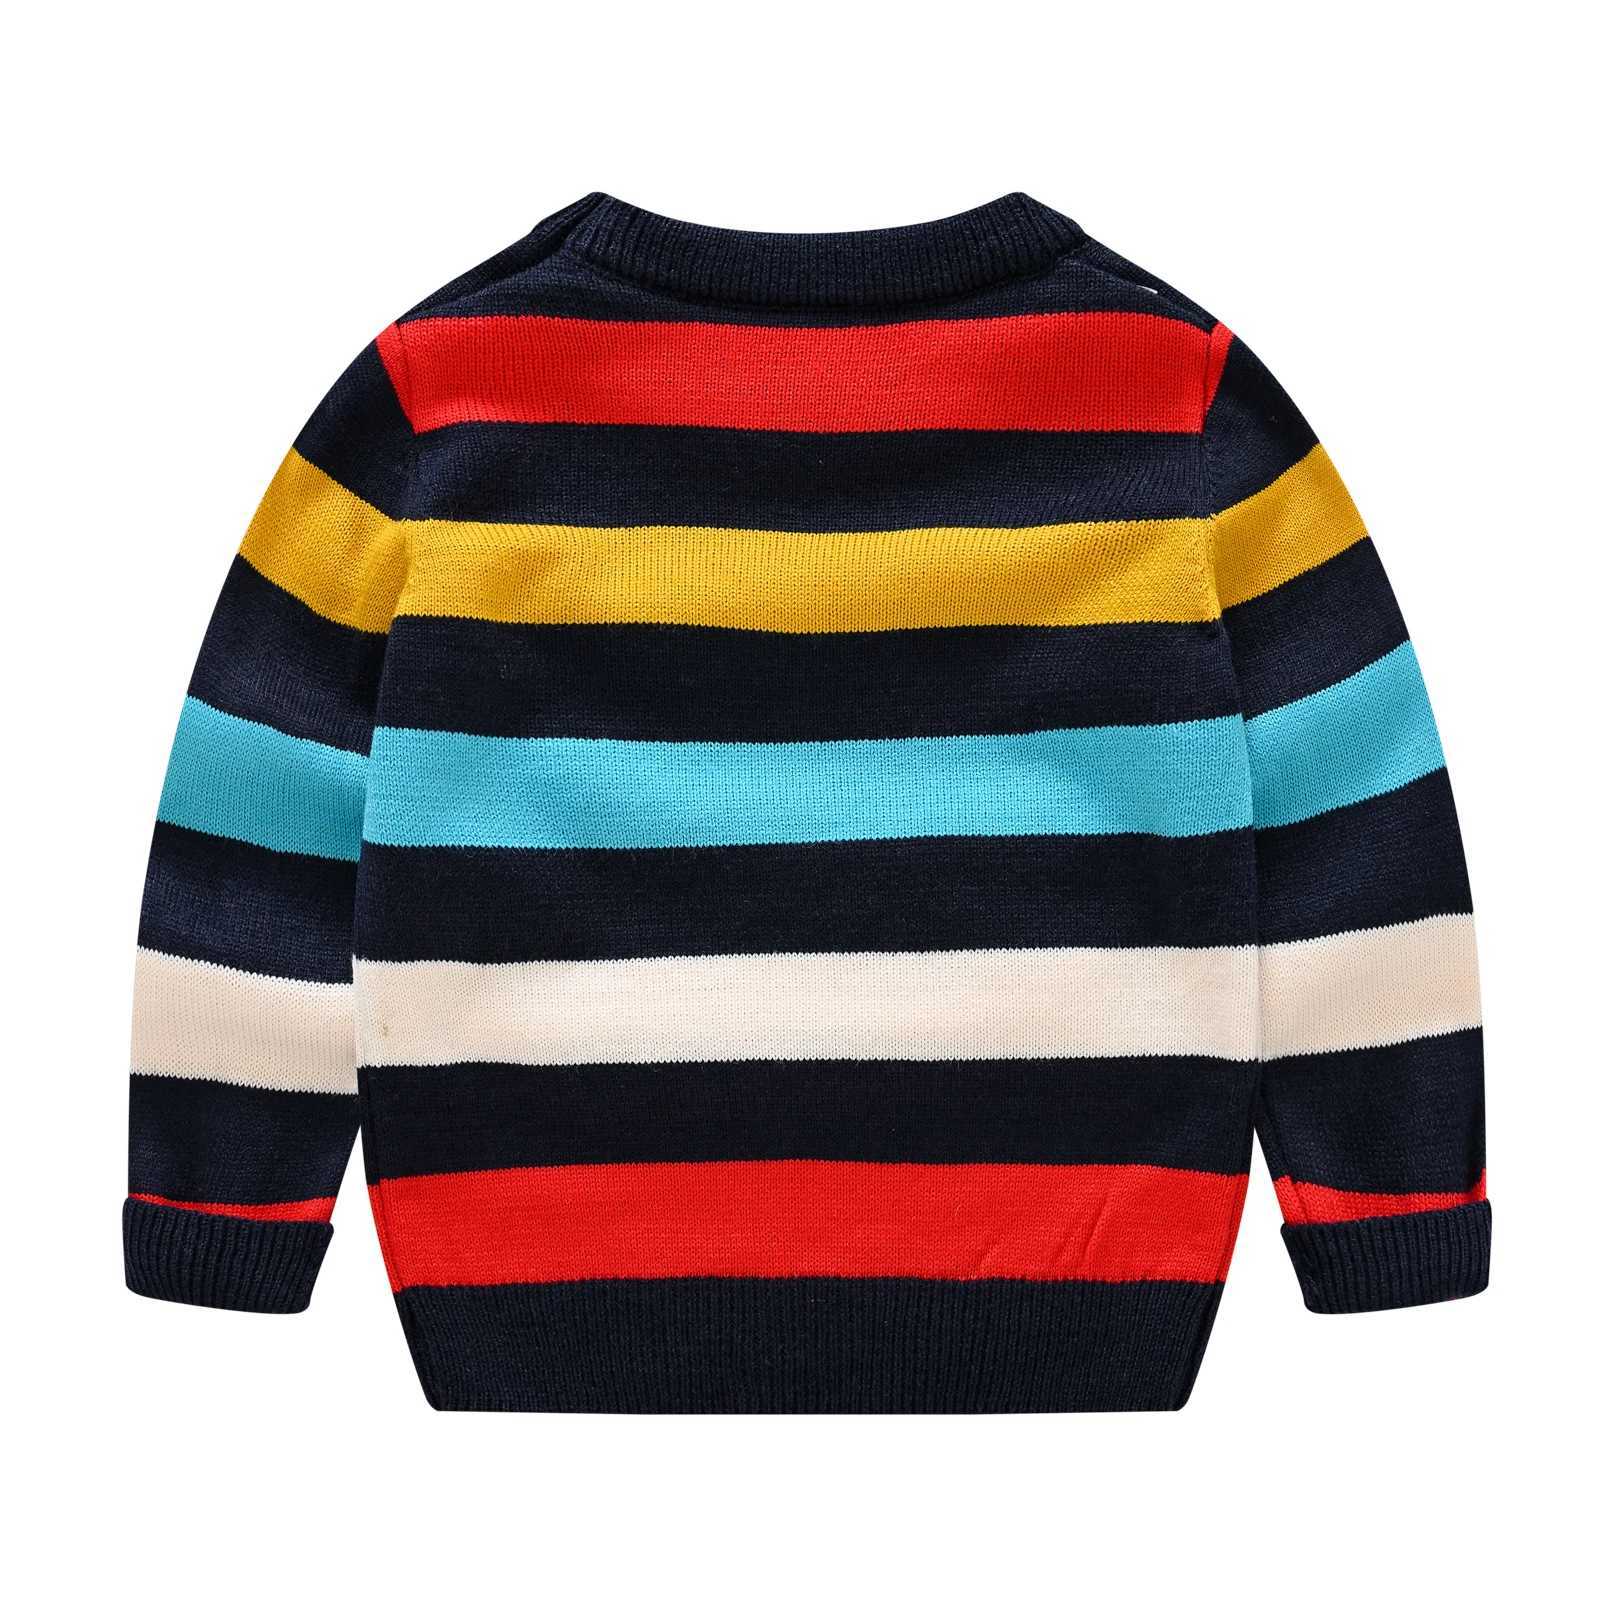 Stylish Kids Knit Sweater - Perfect for Autumn Winter